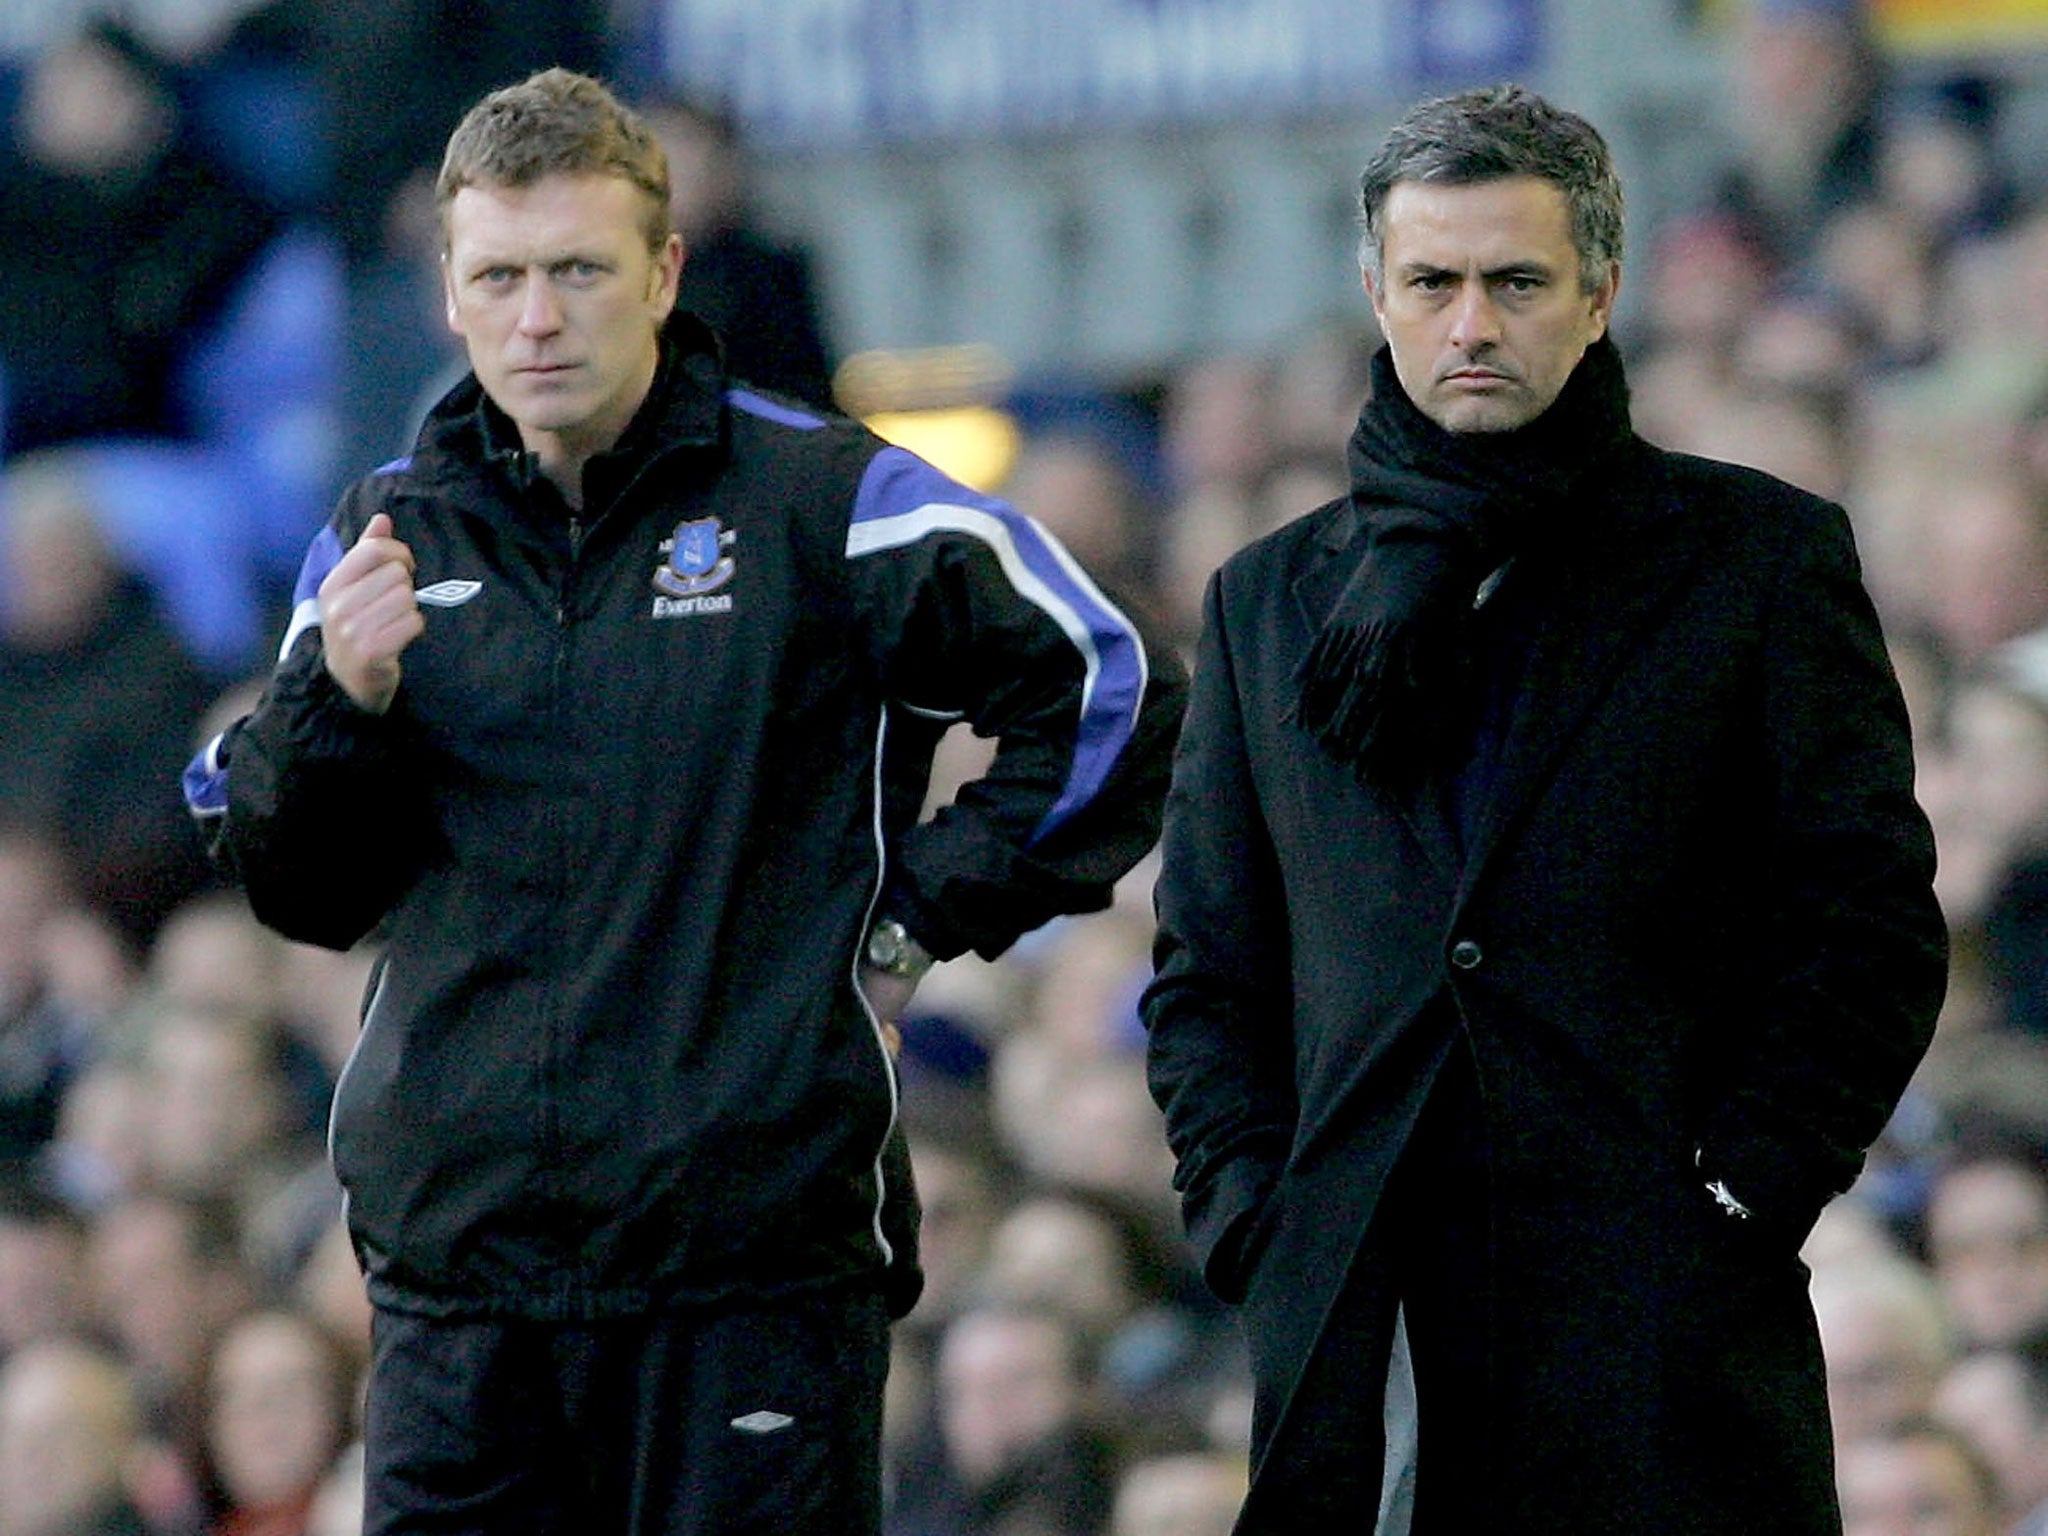 David Moyes, left, has never beaten Jose Mourinho, right, as a manager